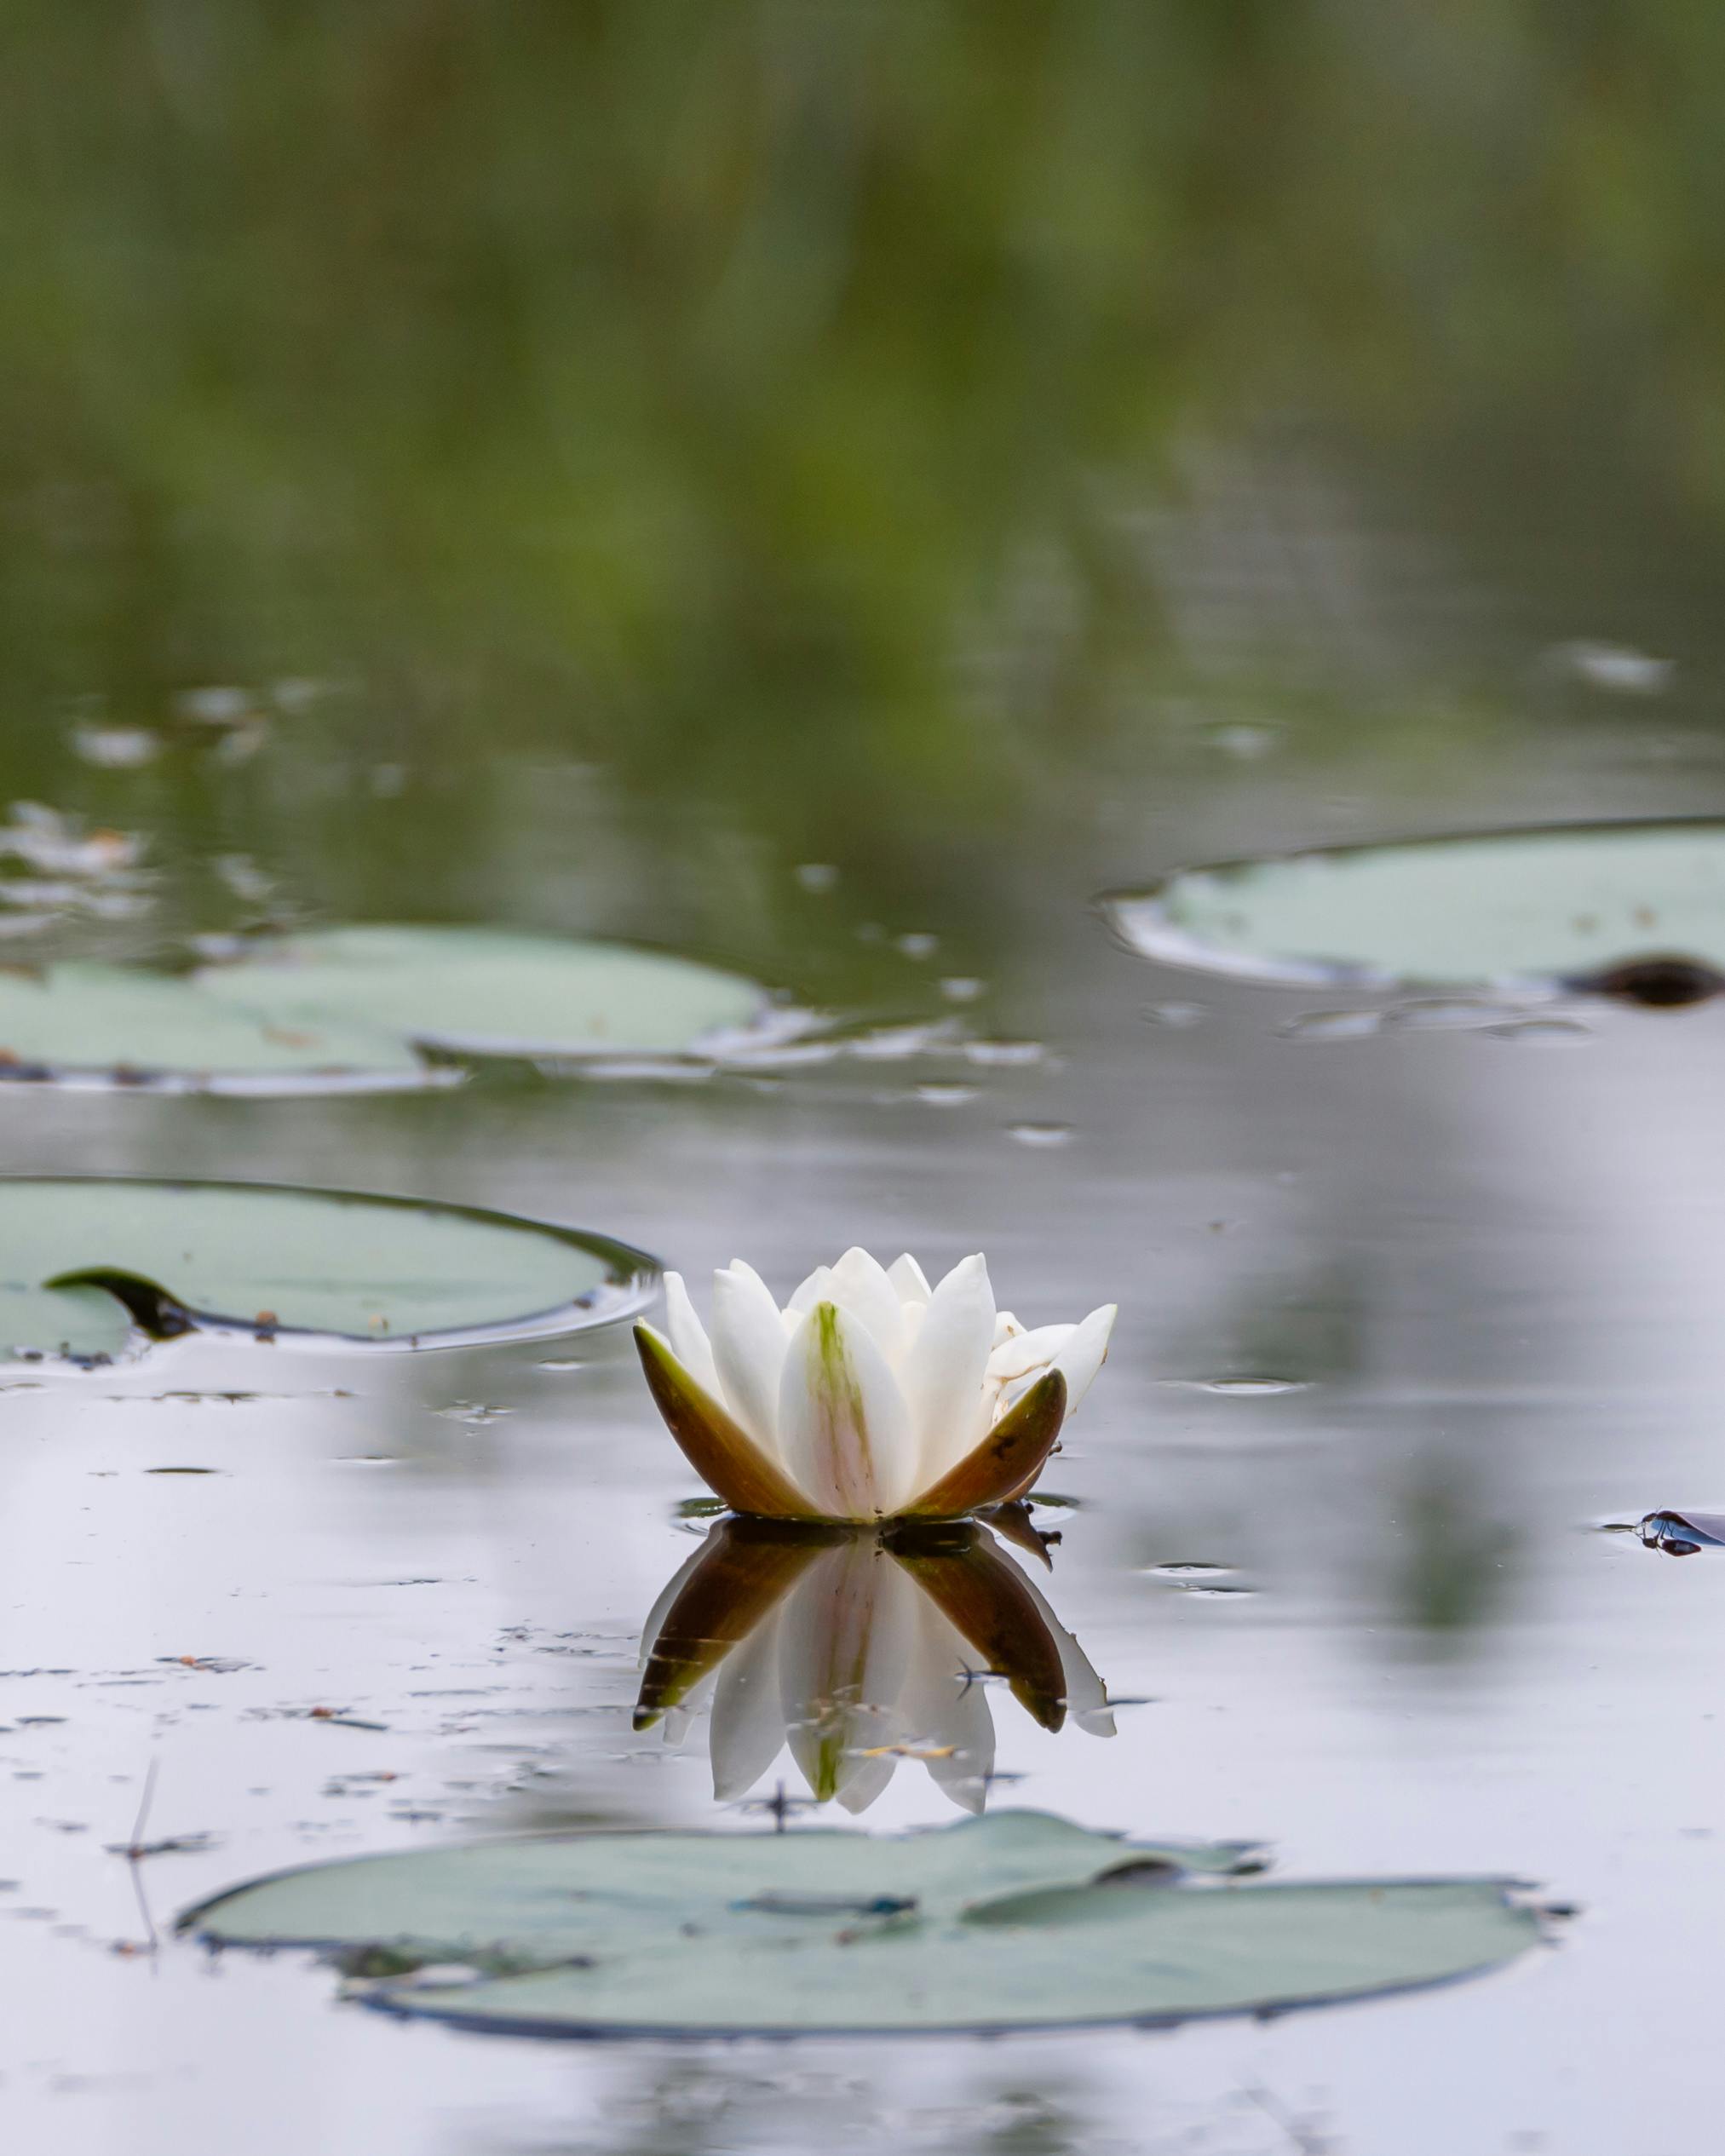 White Lotus Flower On Water · Free Stock Photo